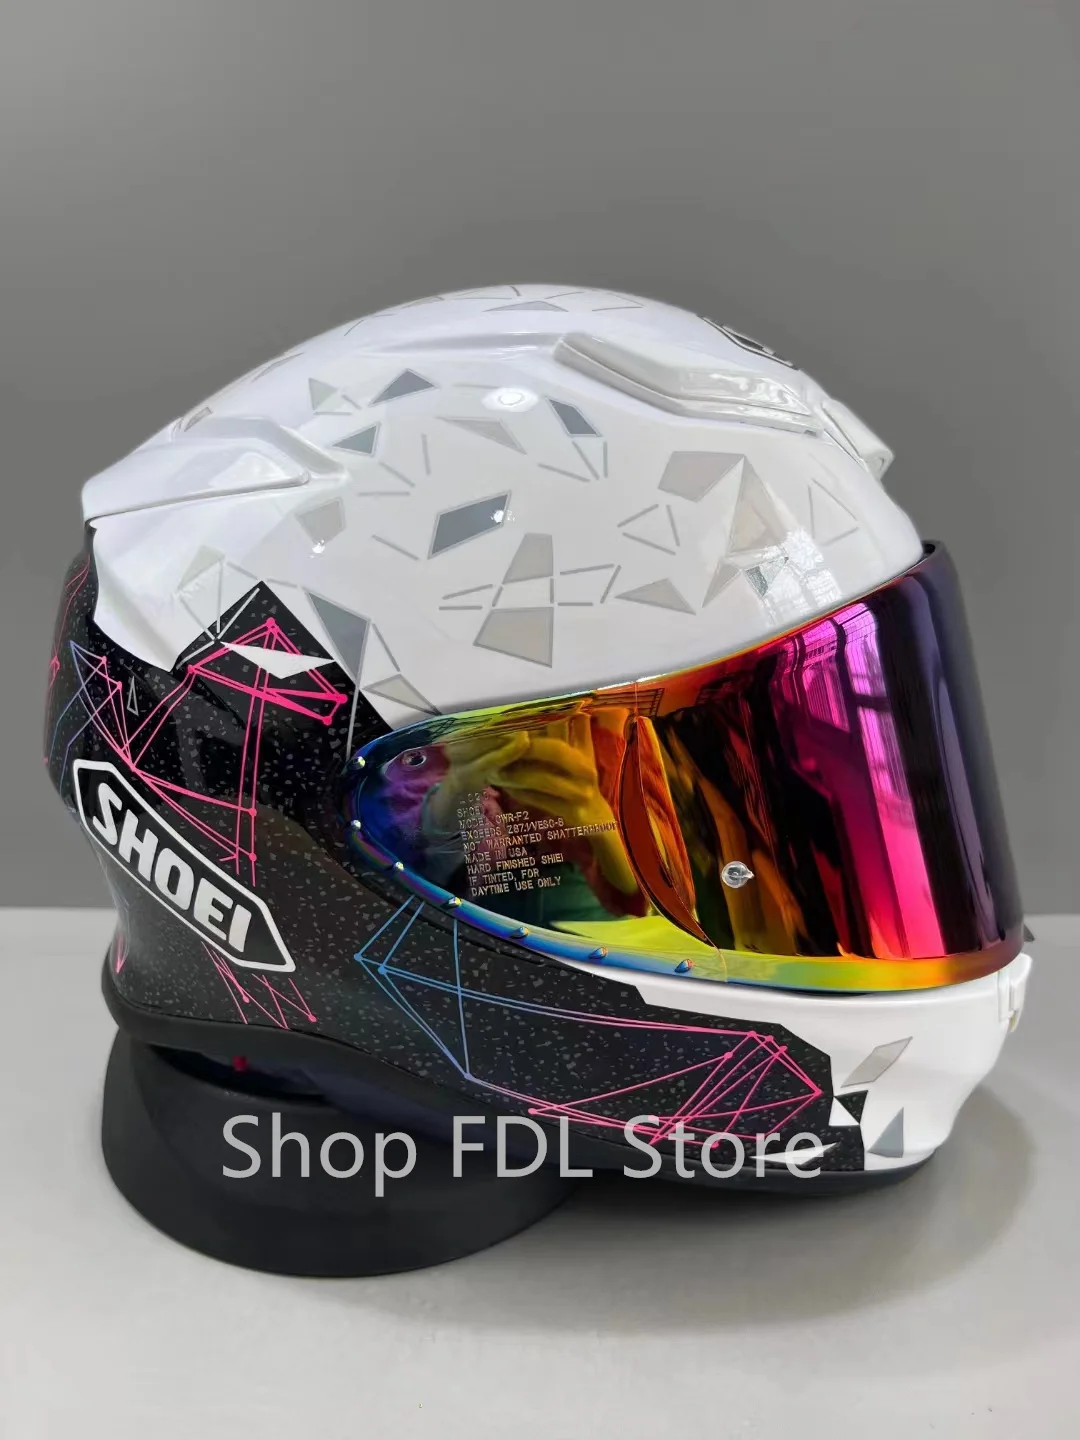 

Мотоциклетный шлем на все лицо Z8 RF-1400 NXR 2 оригами TC-5, шлем для езды на мотоцикле, гоночный мотоциклетный шлем